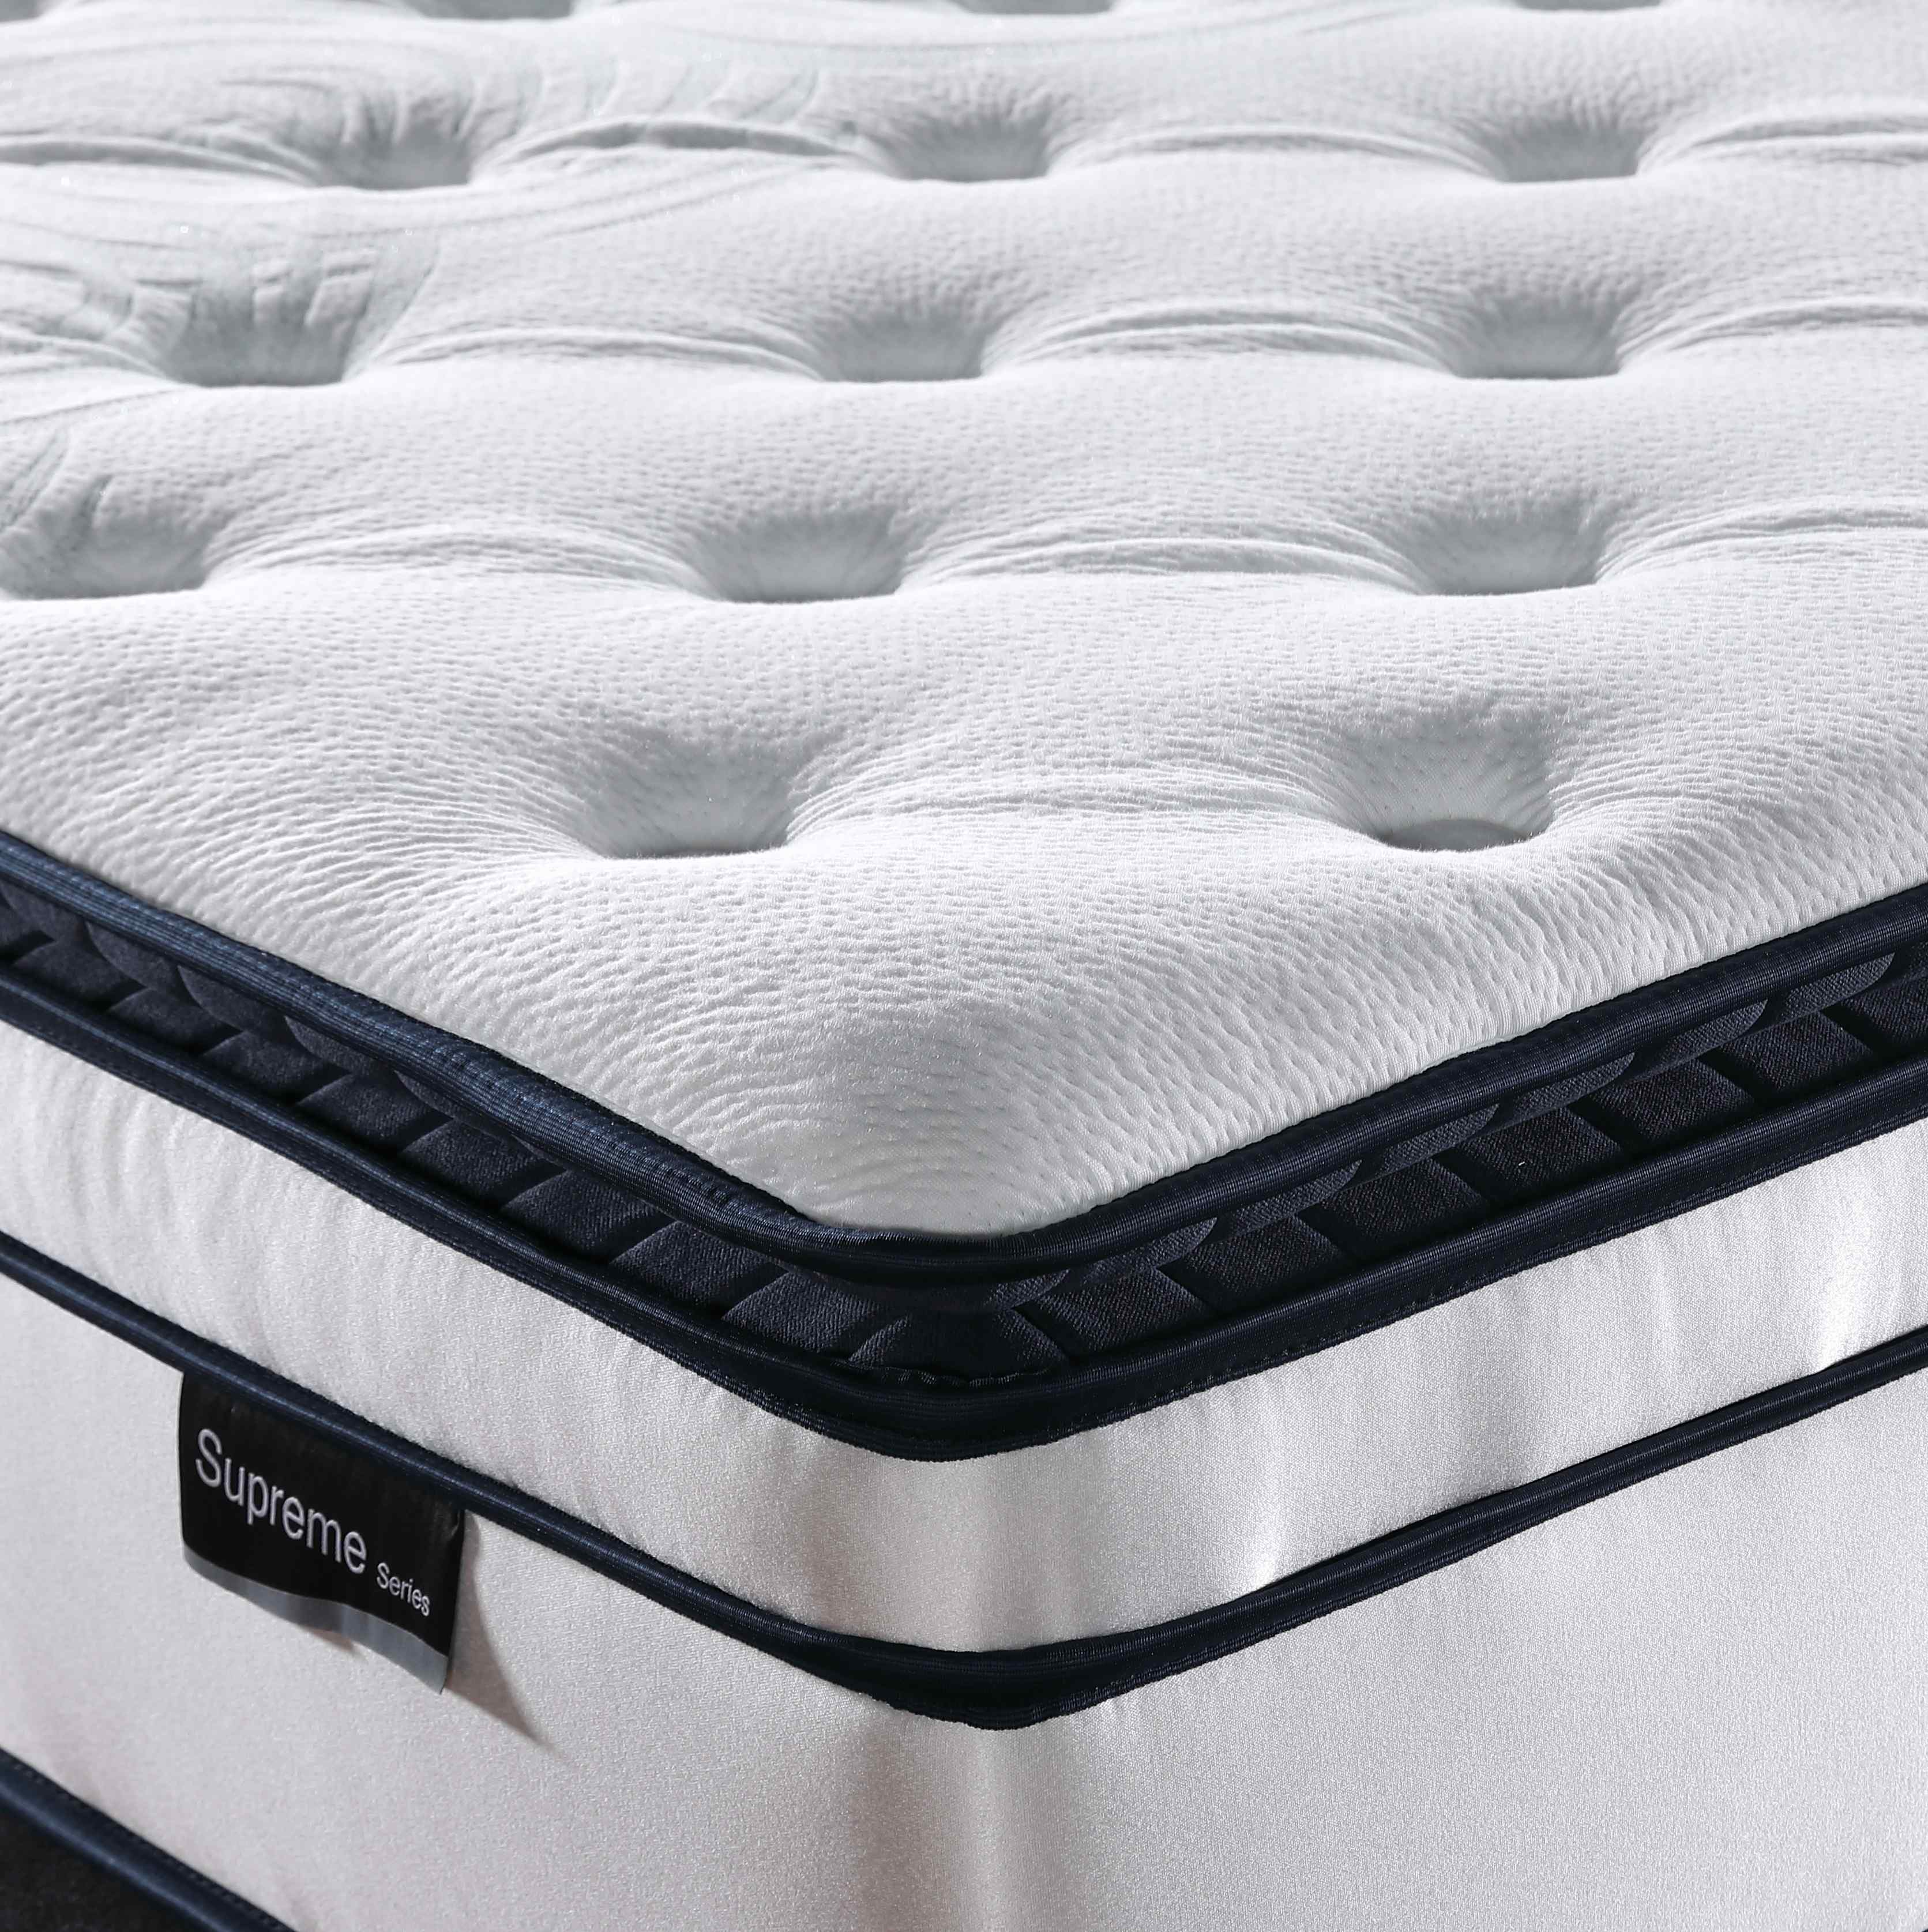 JLH inexpensive single foam mattress for tavern